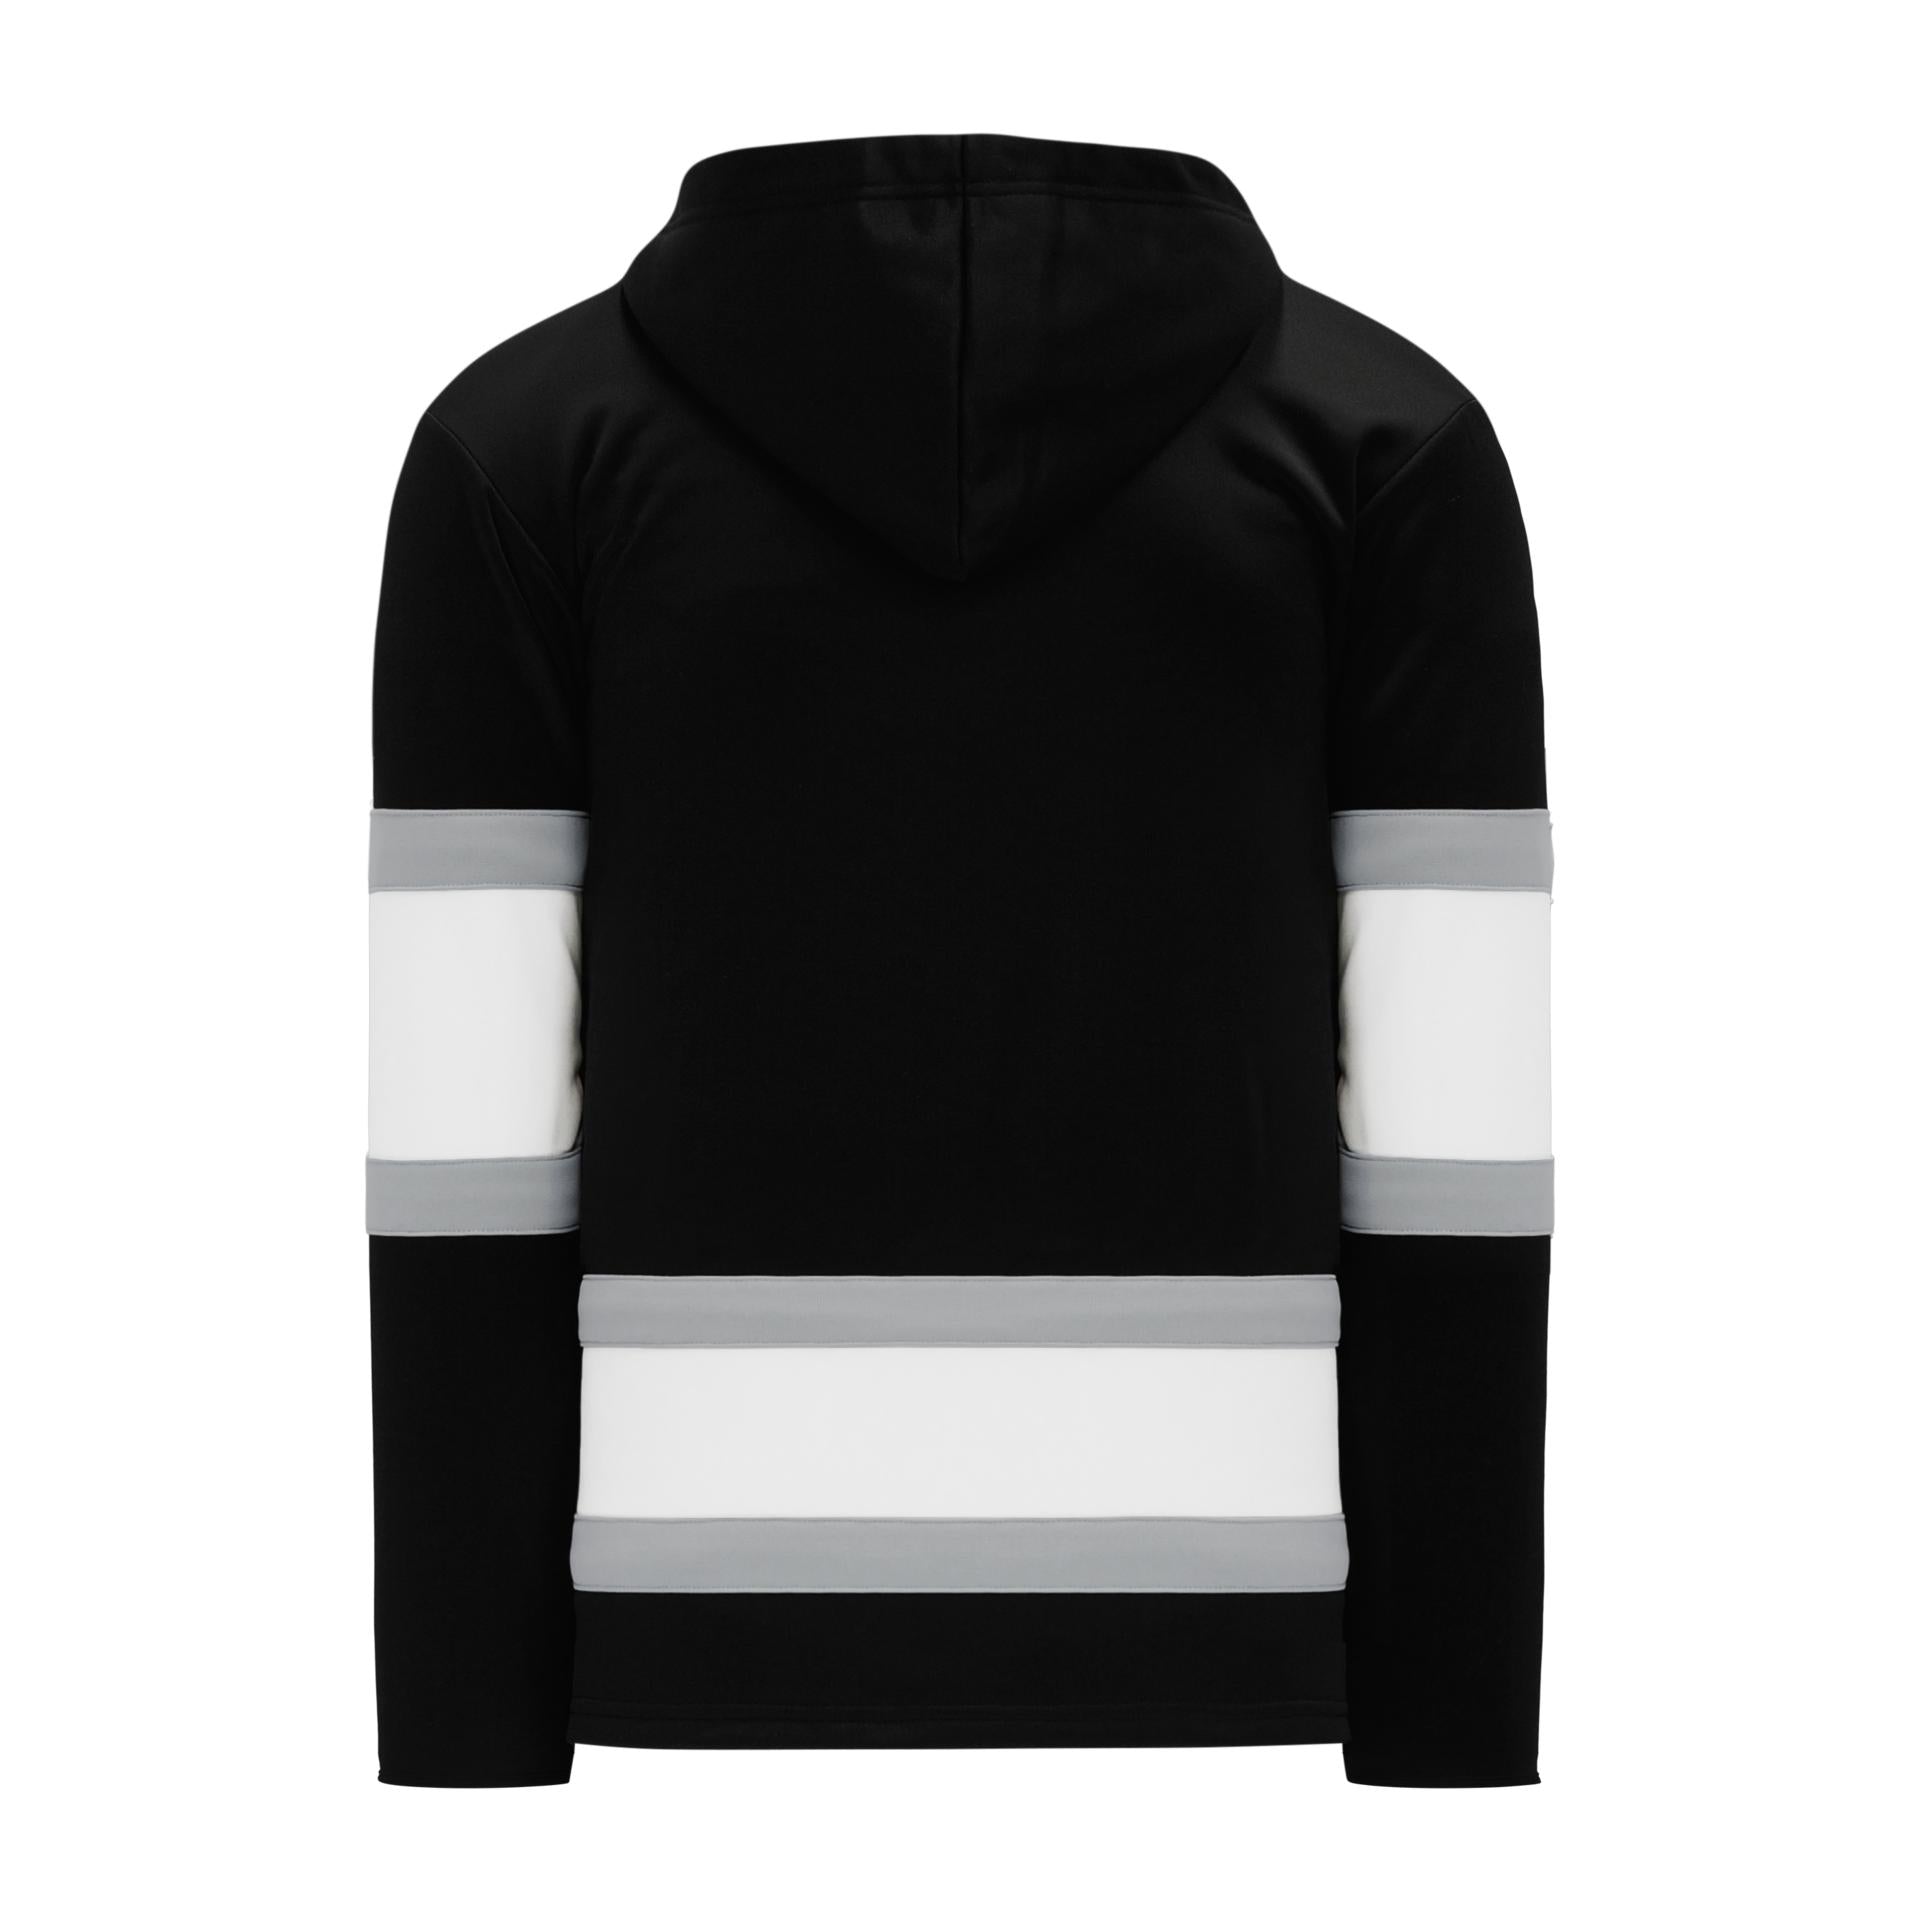 NHL Men's Sweater - Grey - XL